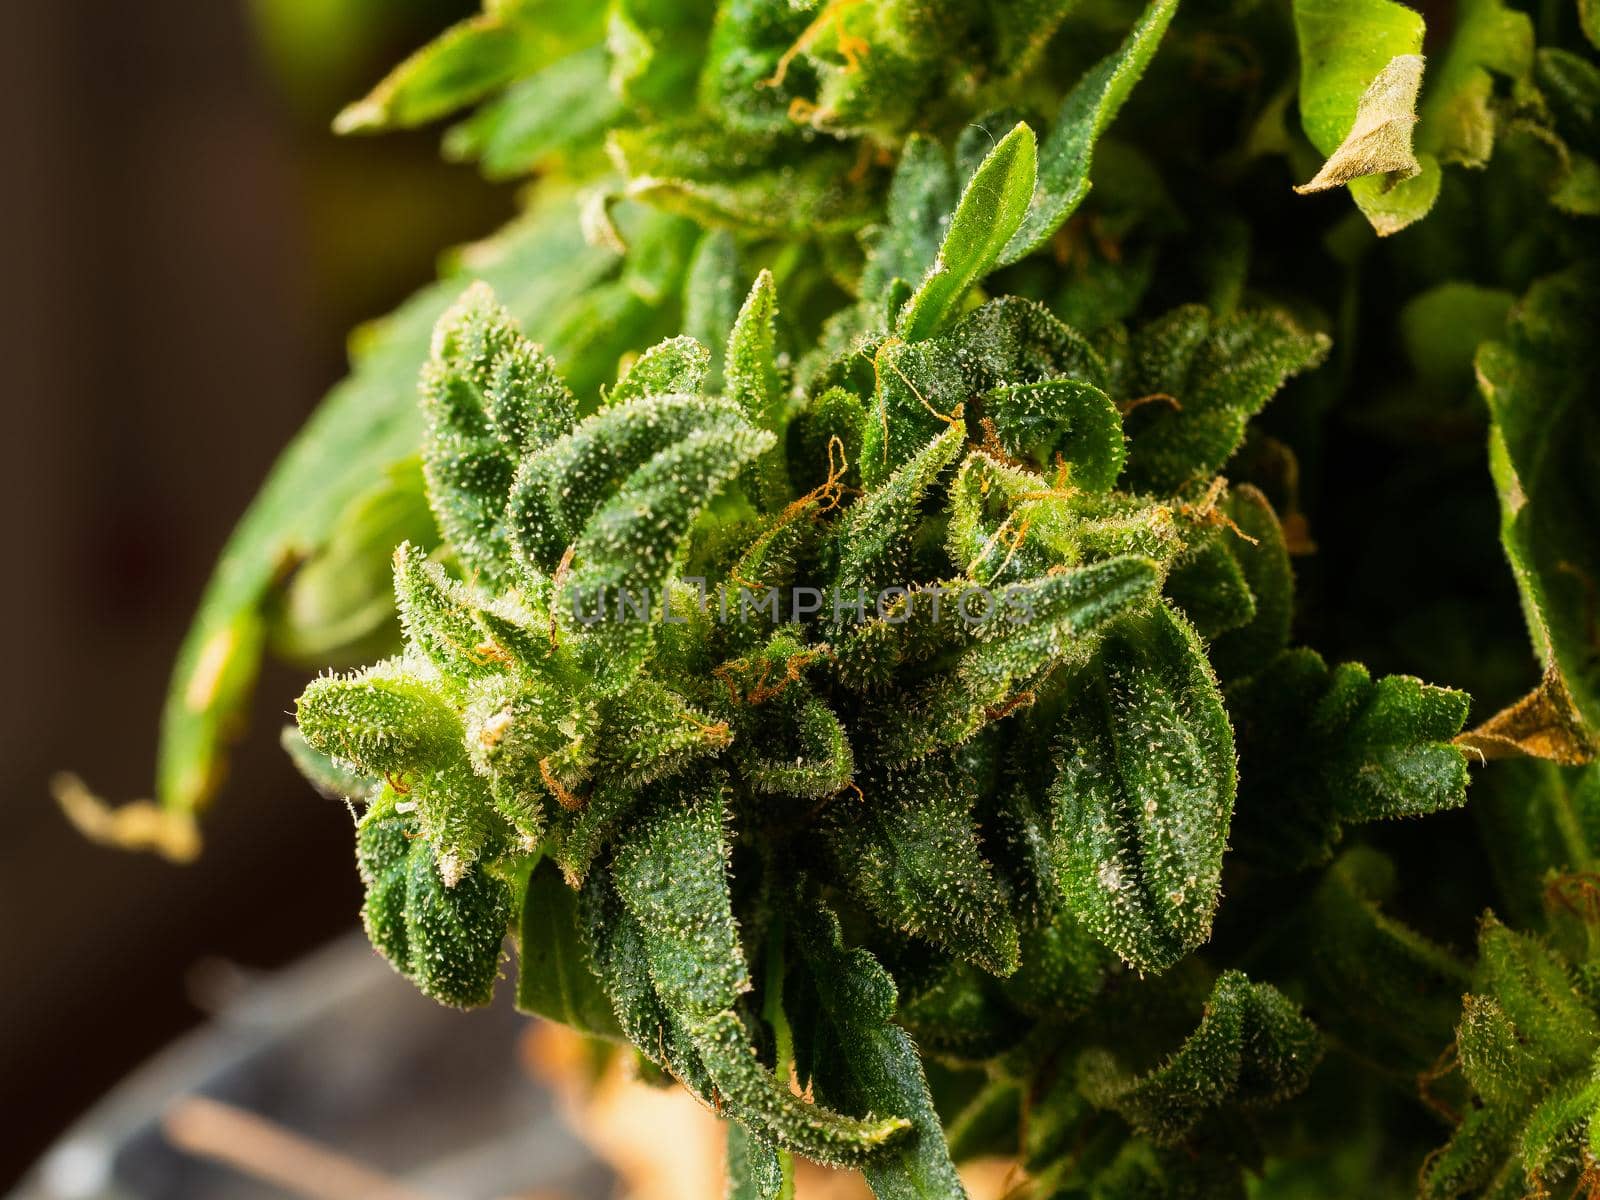 Flowering marijuana plant with trichomes, indica, close-up hybrid.